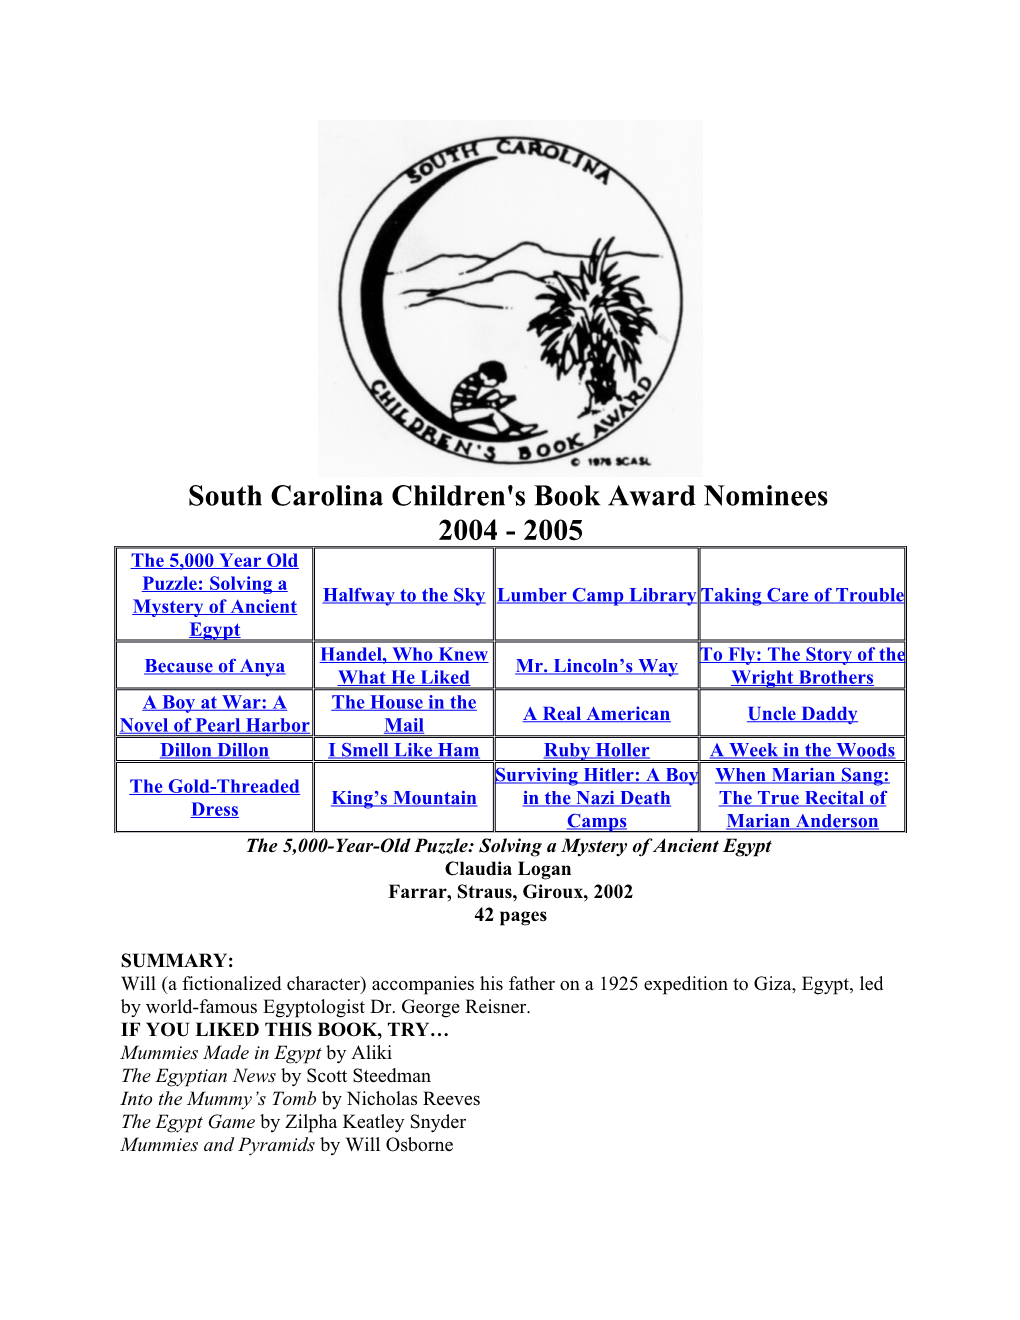 South Carolinachildren's Book Award Nominees 2004 - 2005